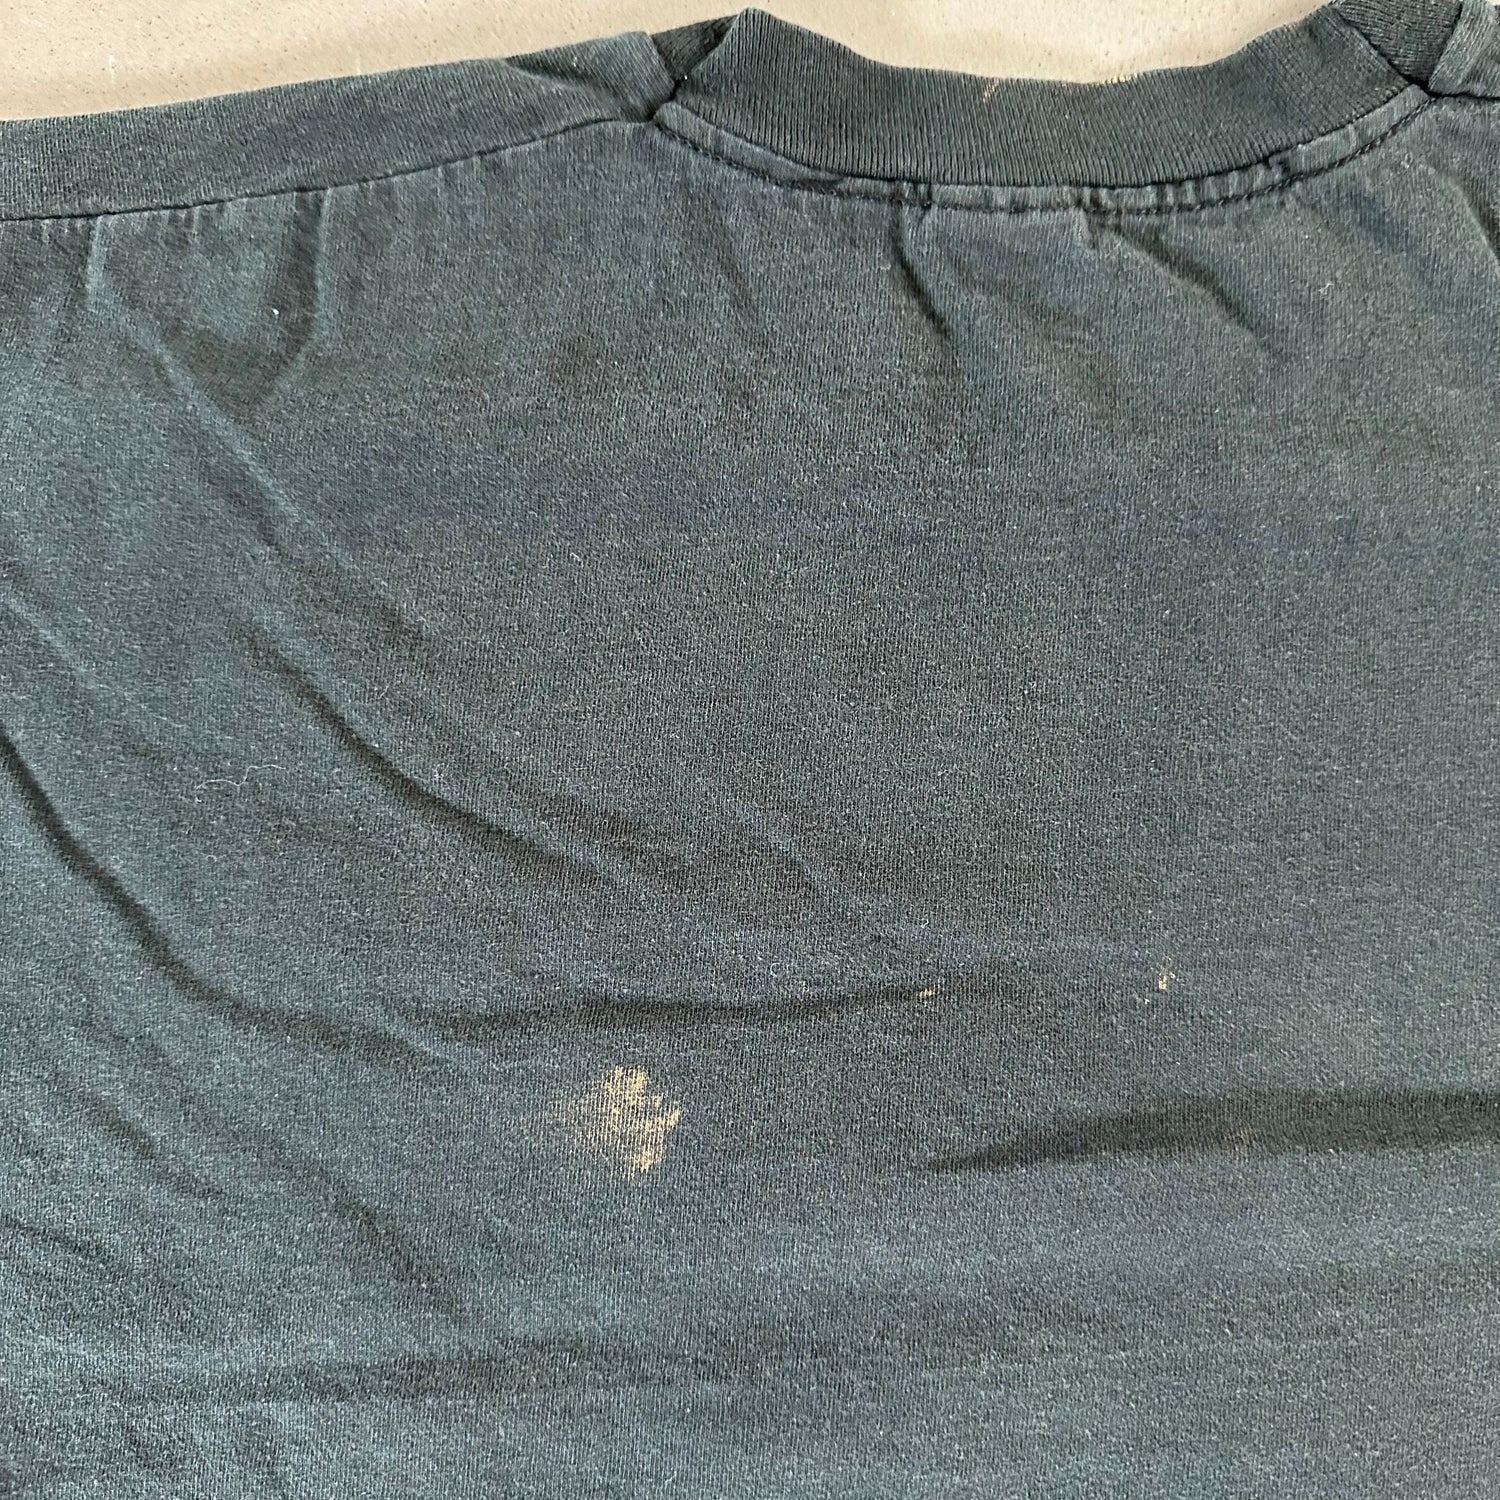 Vintage 1994 University of Wisconsin  T-shirt size XL